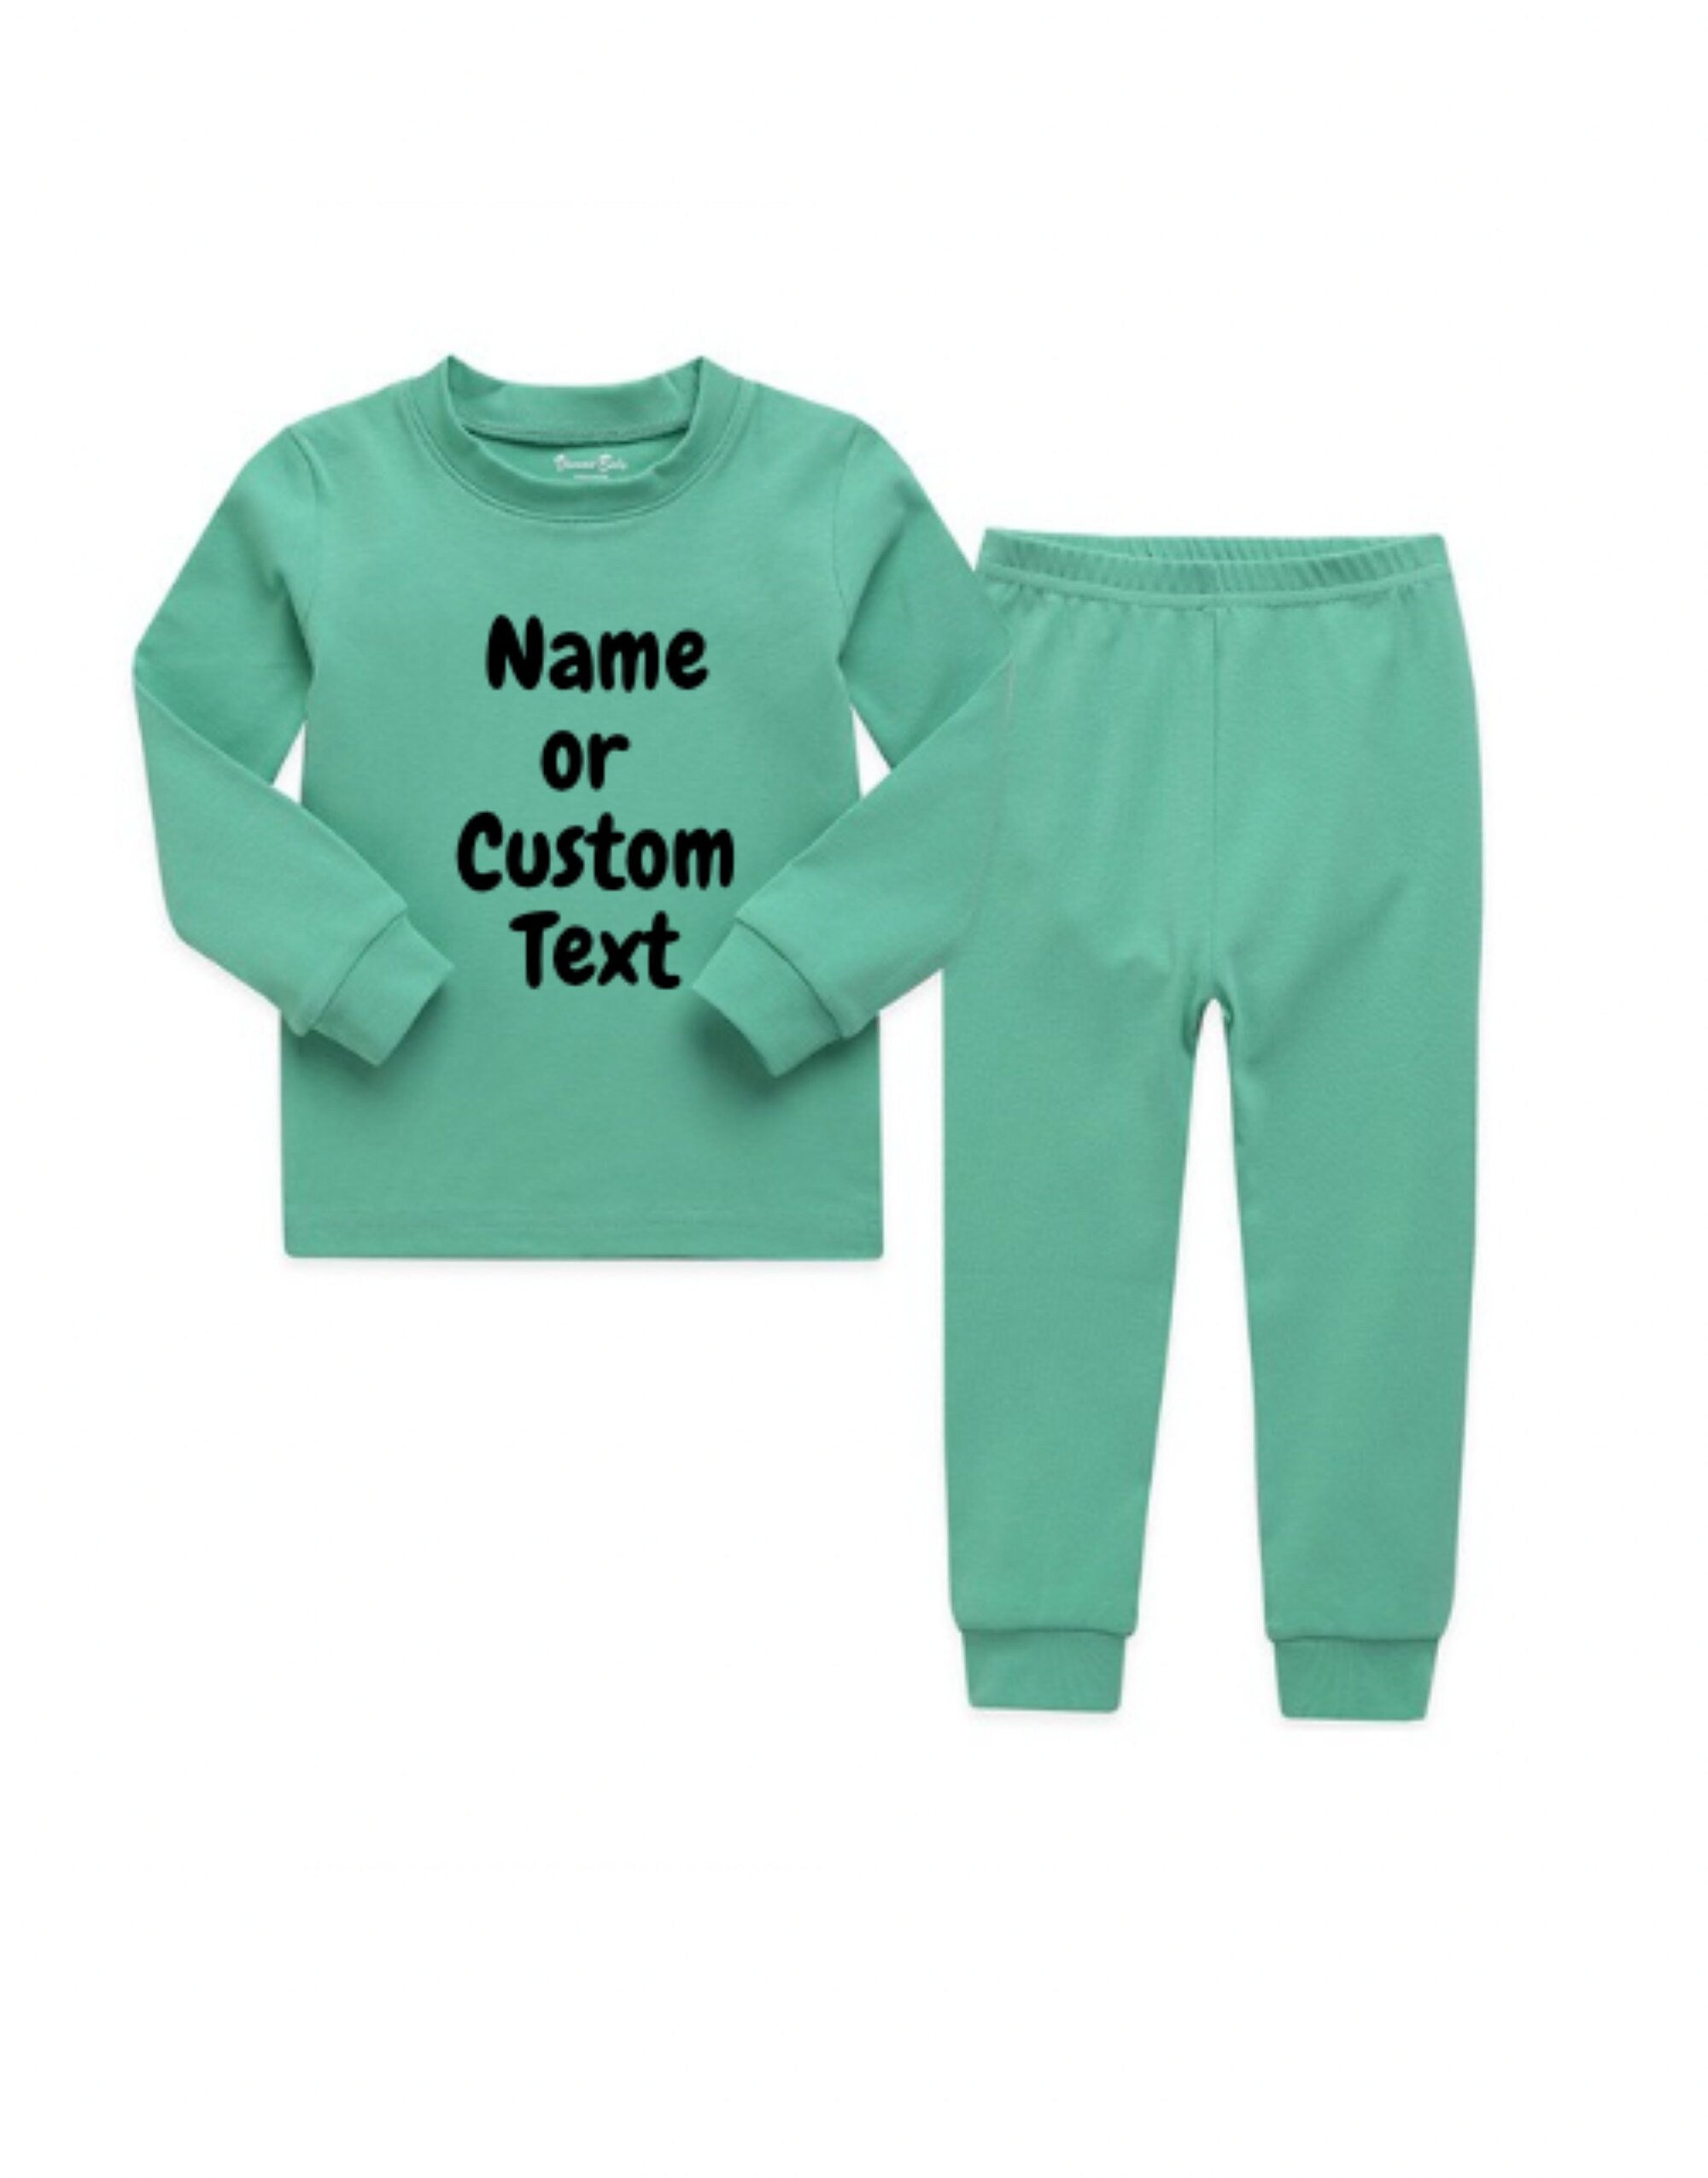 Kids Personalized Pajama Set| Name or Custom Text| Toddler Youth Pajamas| Big Kids| Multiple Colors|2 Piece Set| Sleeper| Girl| Boy| Gree